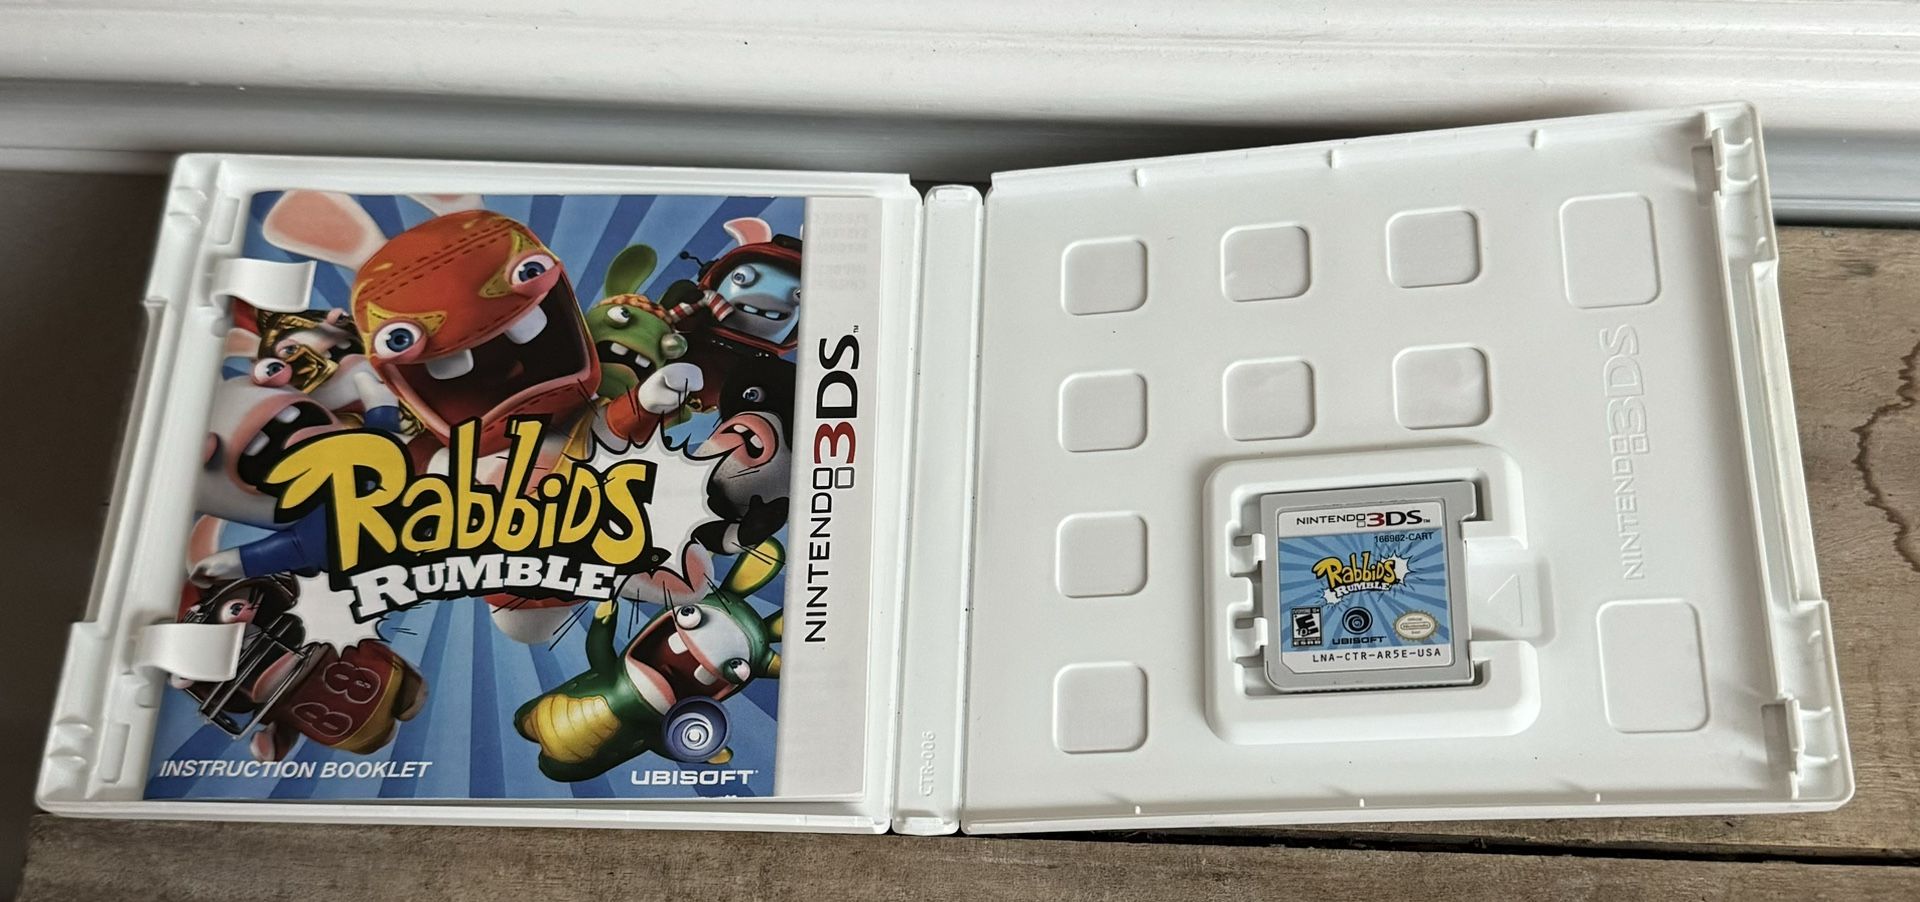 Nintendo 3DS Game Rabbids Rumble just $8